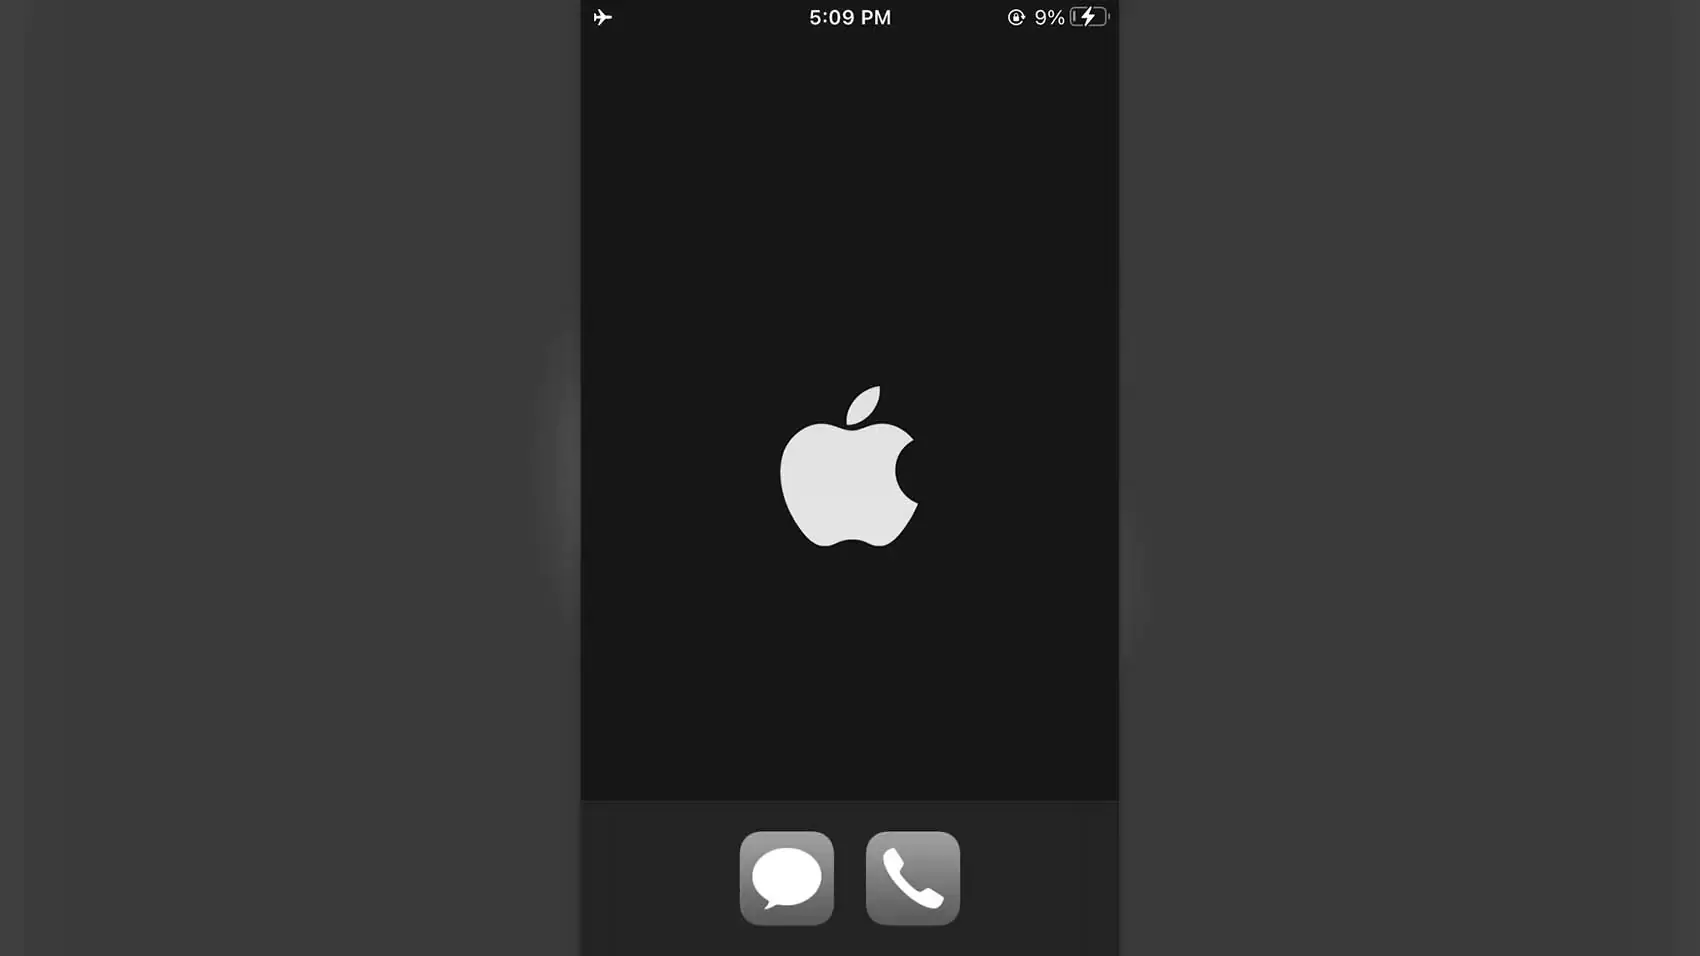 dumb black and white minimalist iphone